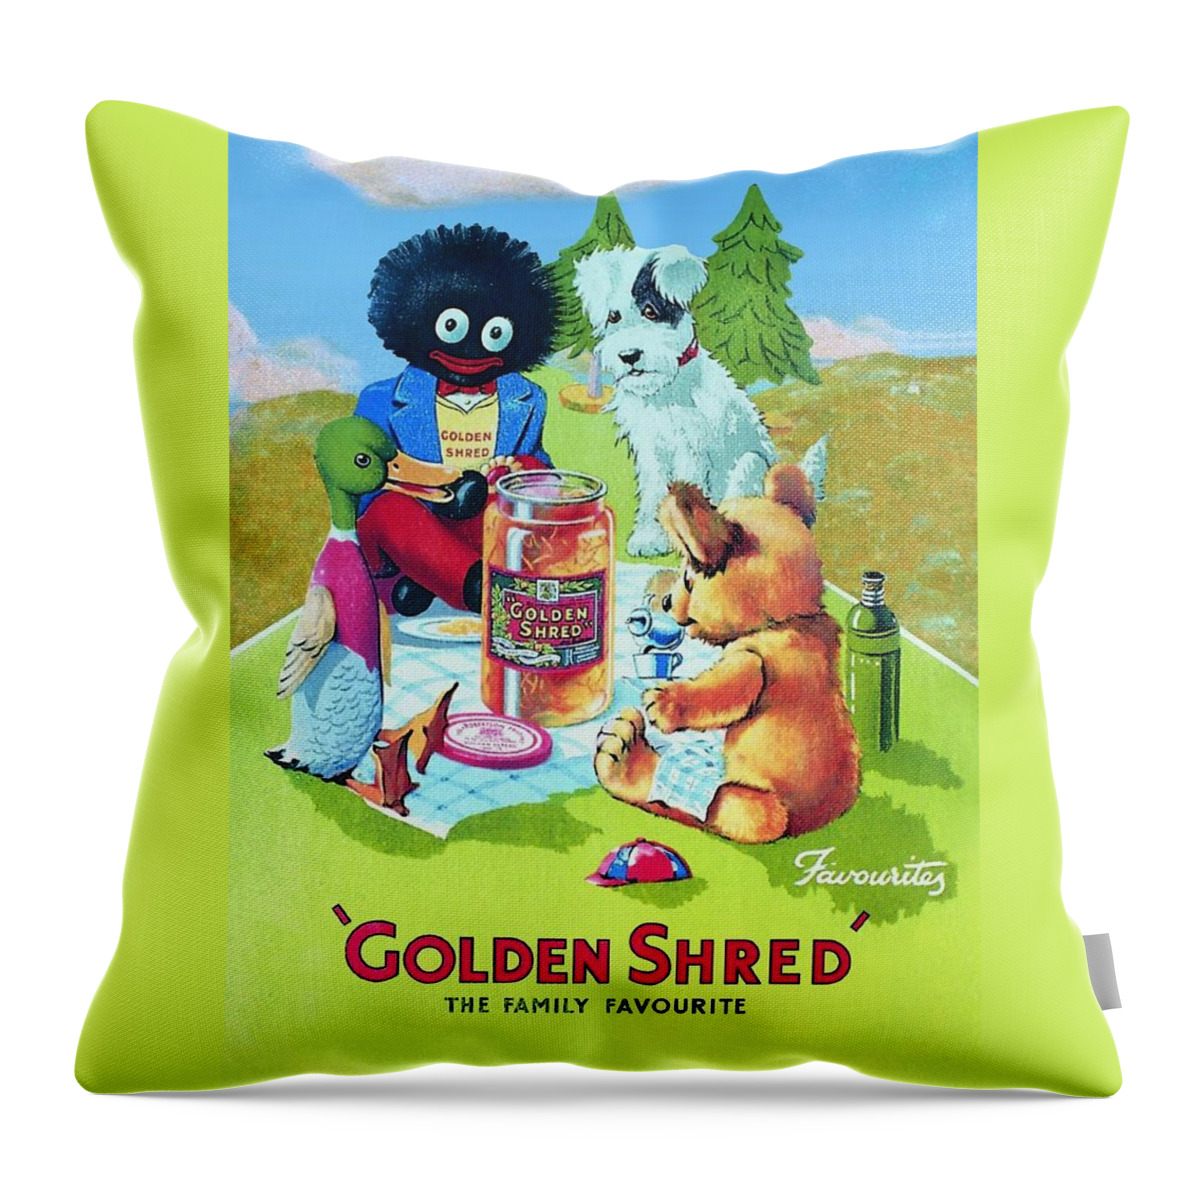 Golden Shred Throw Pillow featuring the digital art Golden Shred by Georgia Fowler